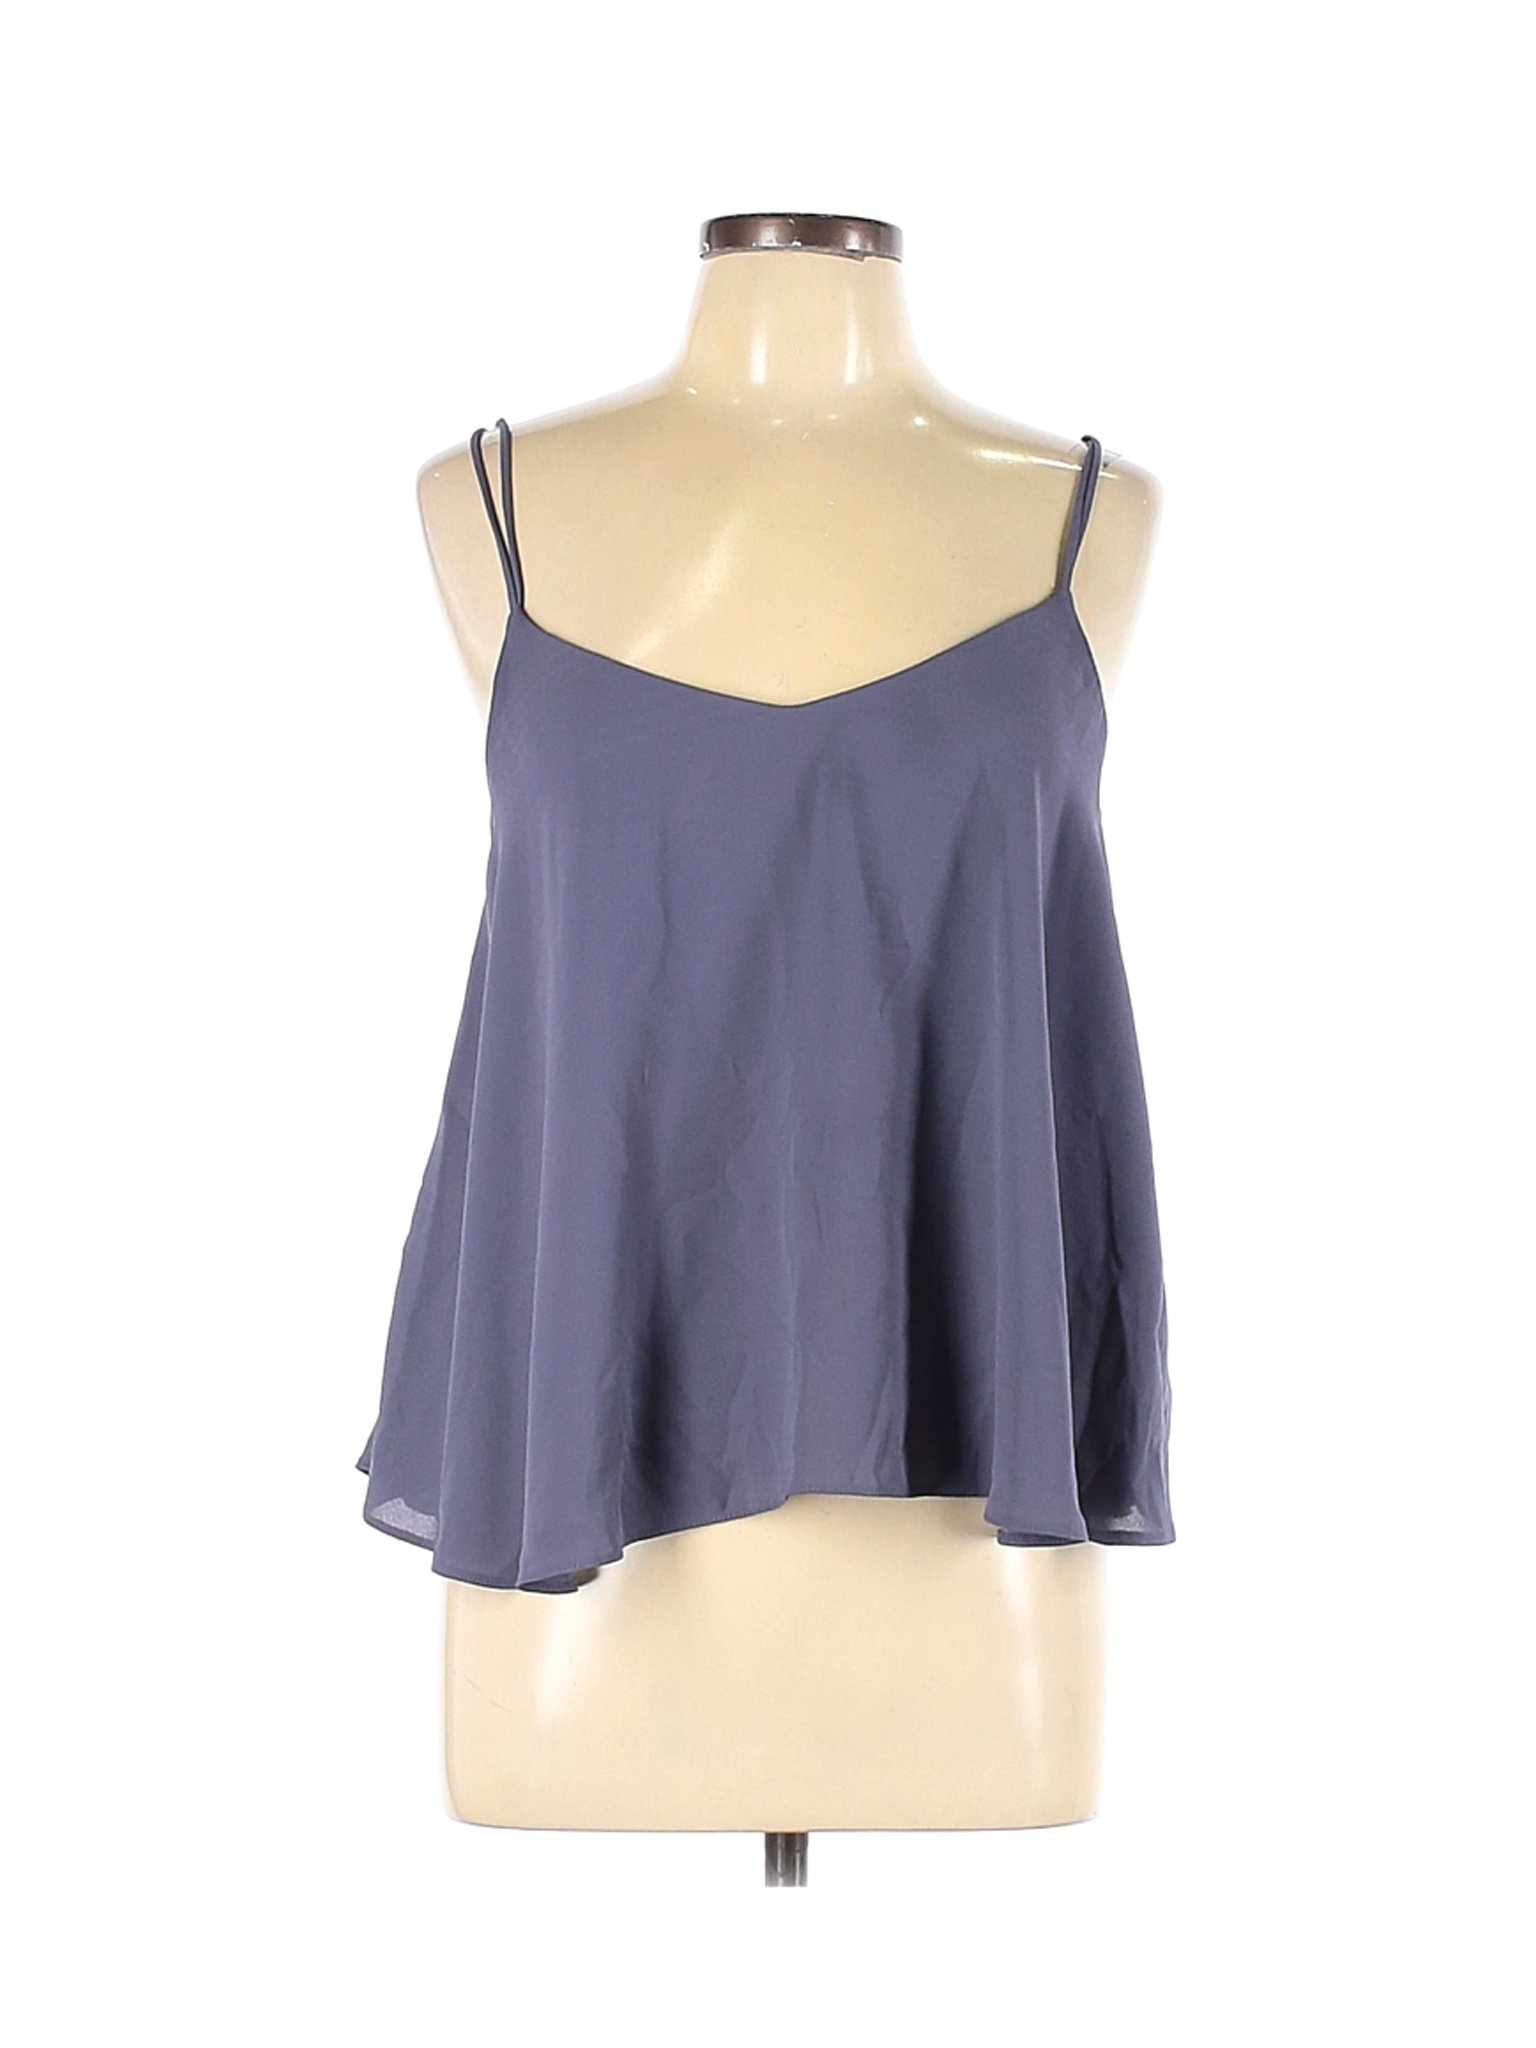 Topshop Women Purple Sleeveless Blouse 10 | eBay